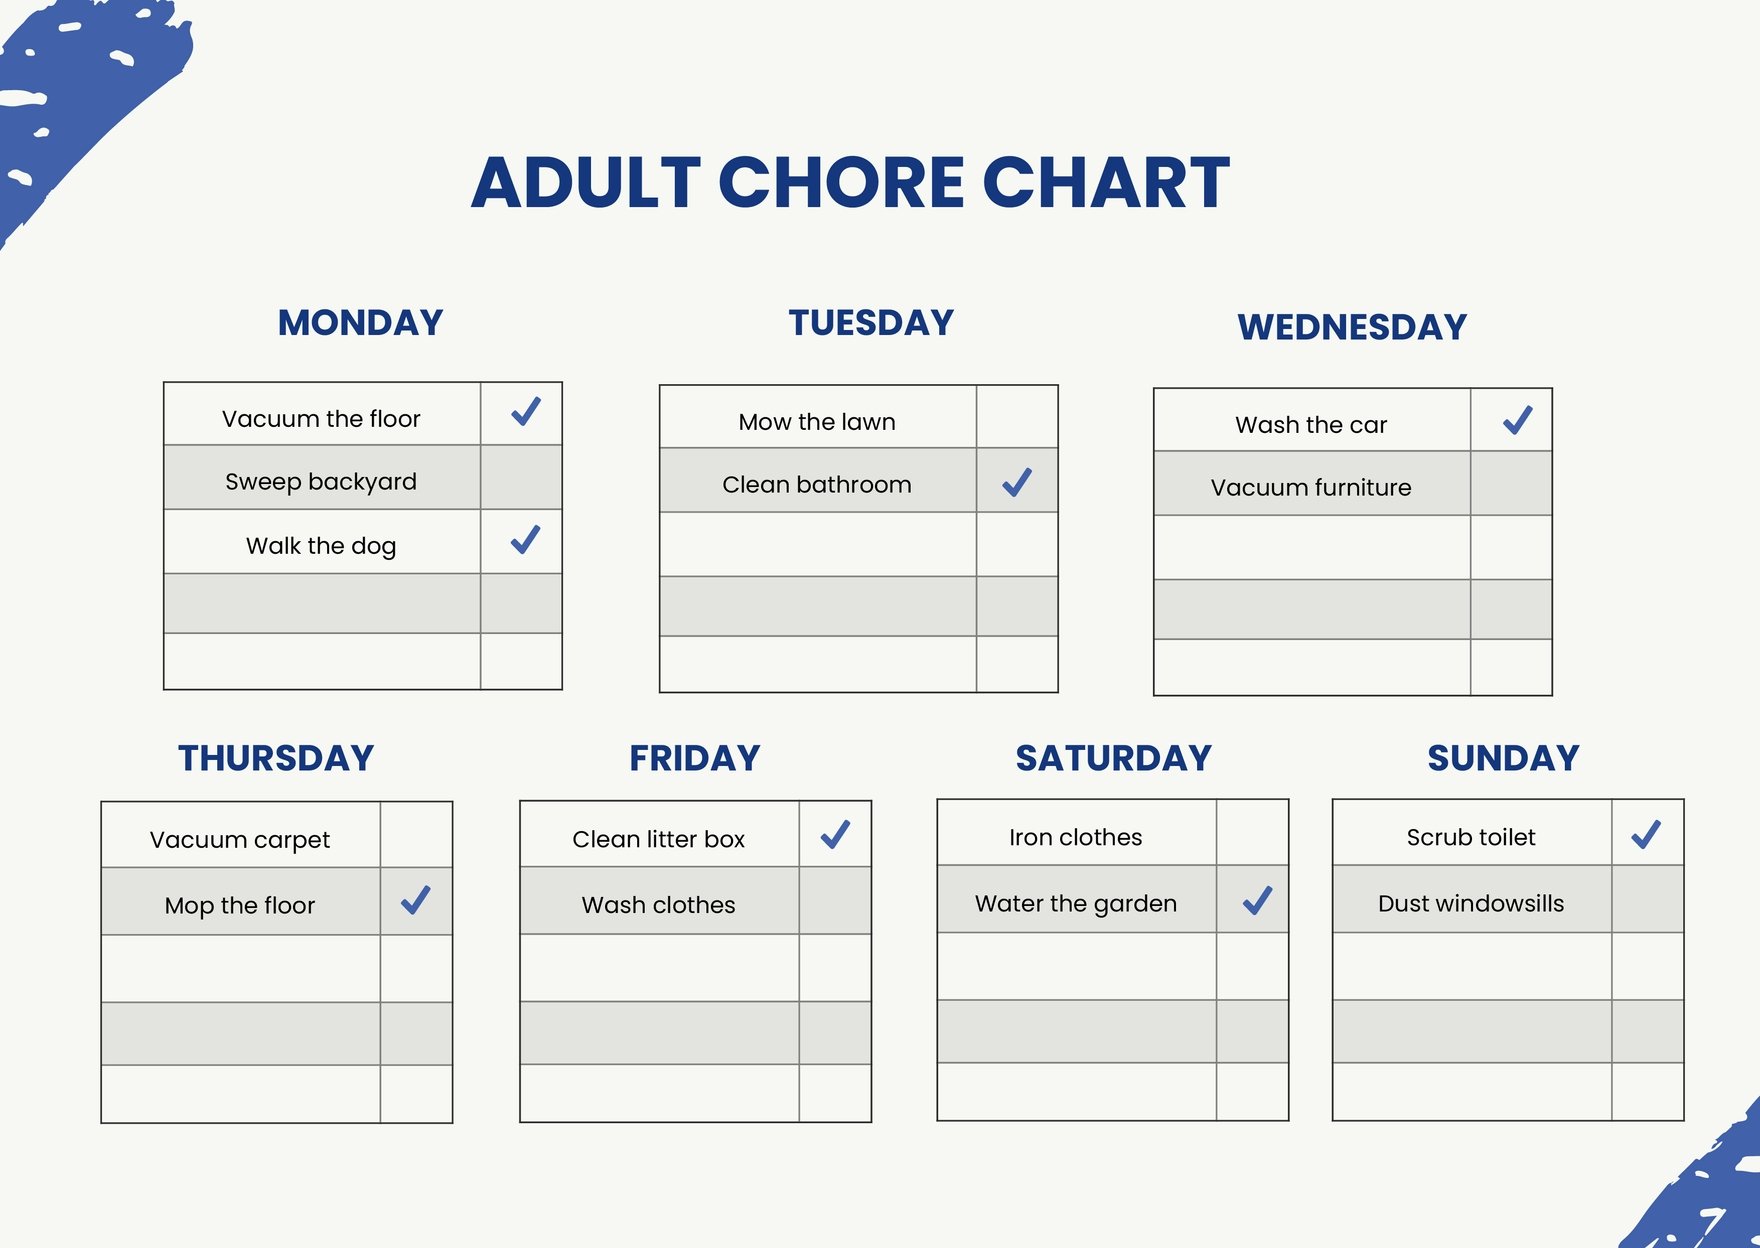 Adult Chore Chart in PDF, Illustrator